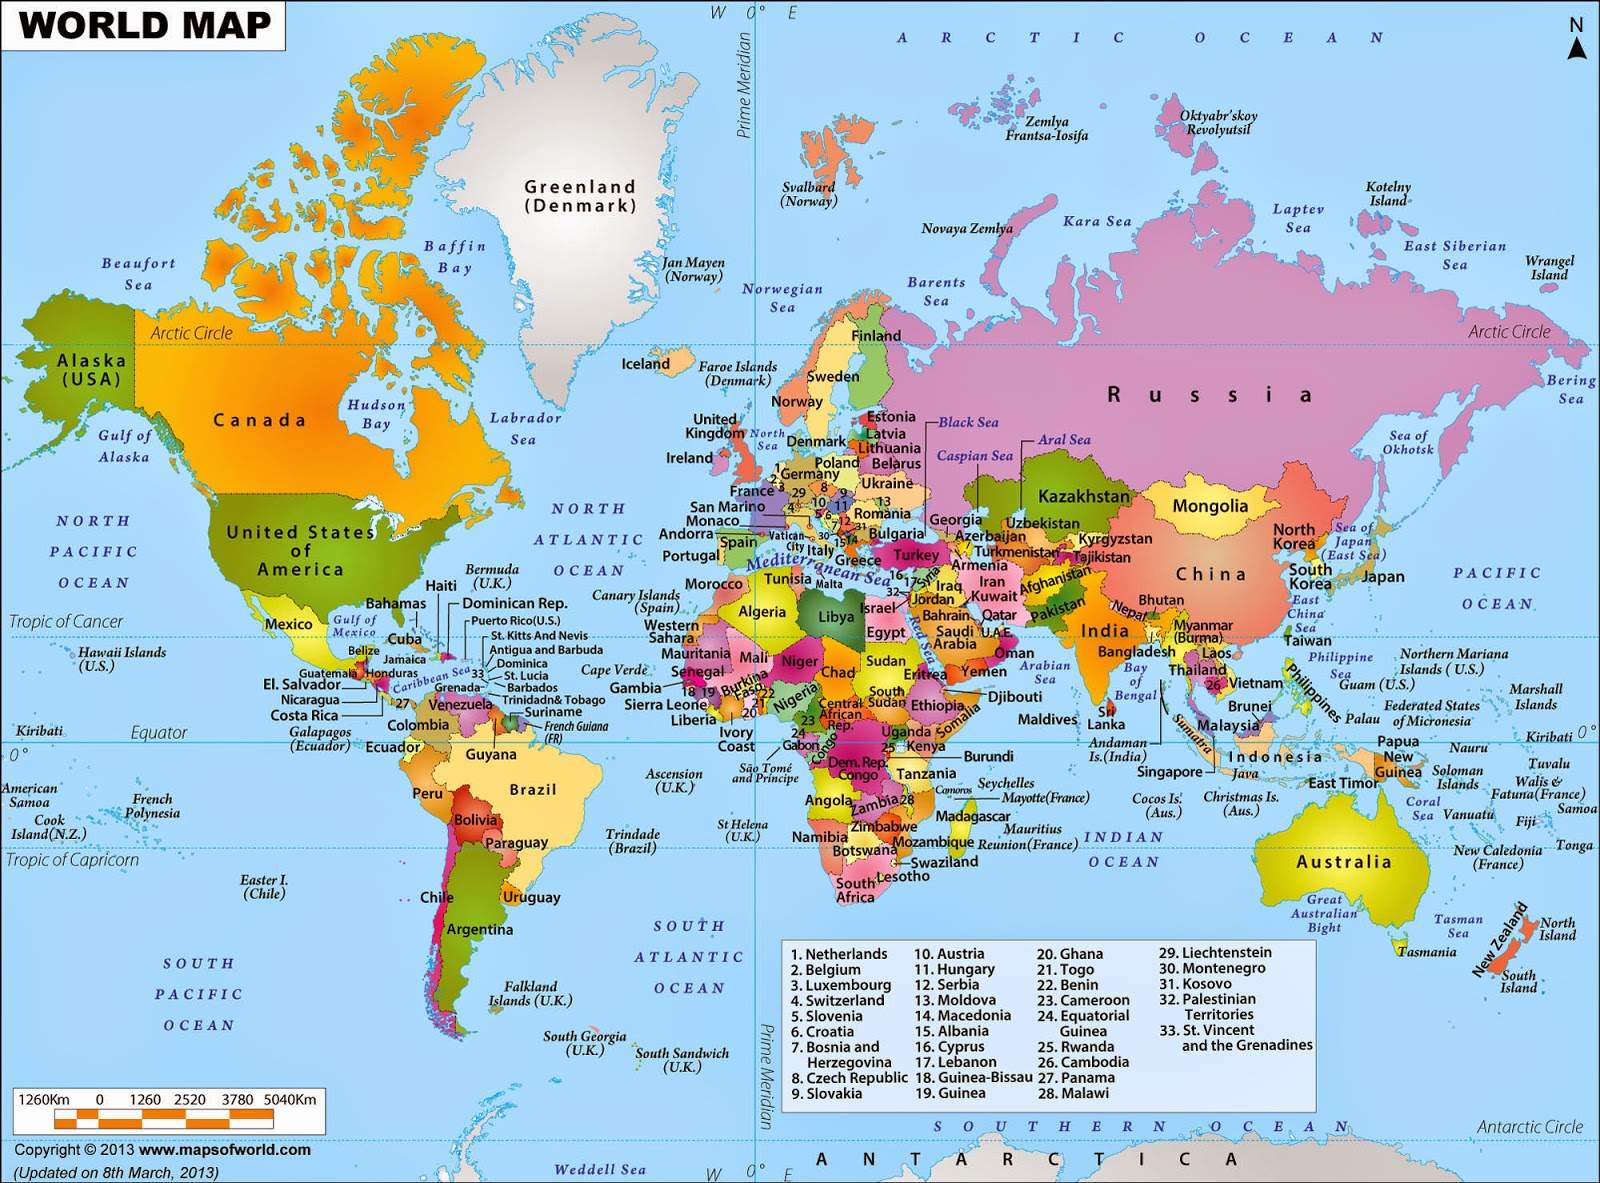 Peta Dunia Paling Jelas high resolution - Altovart Blog